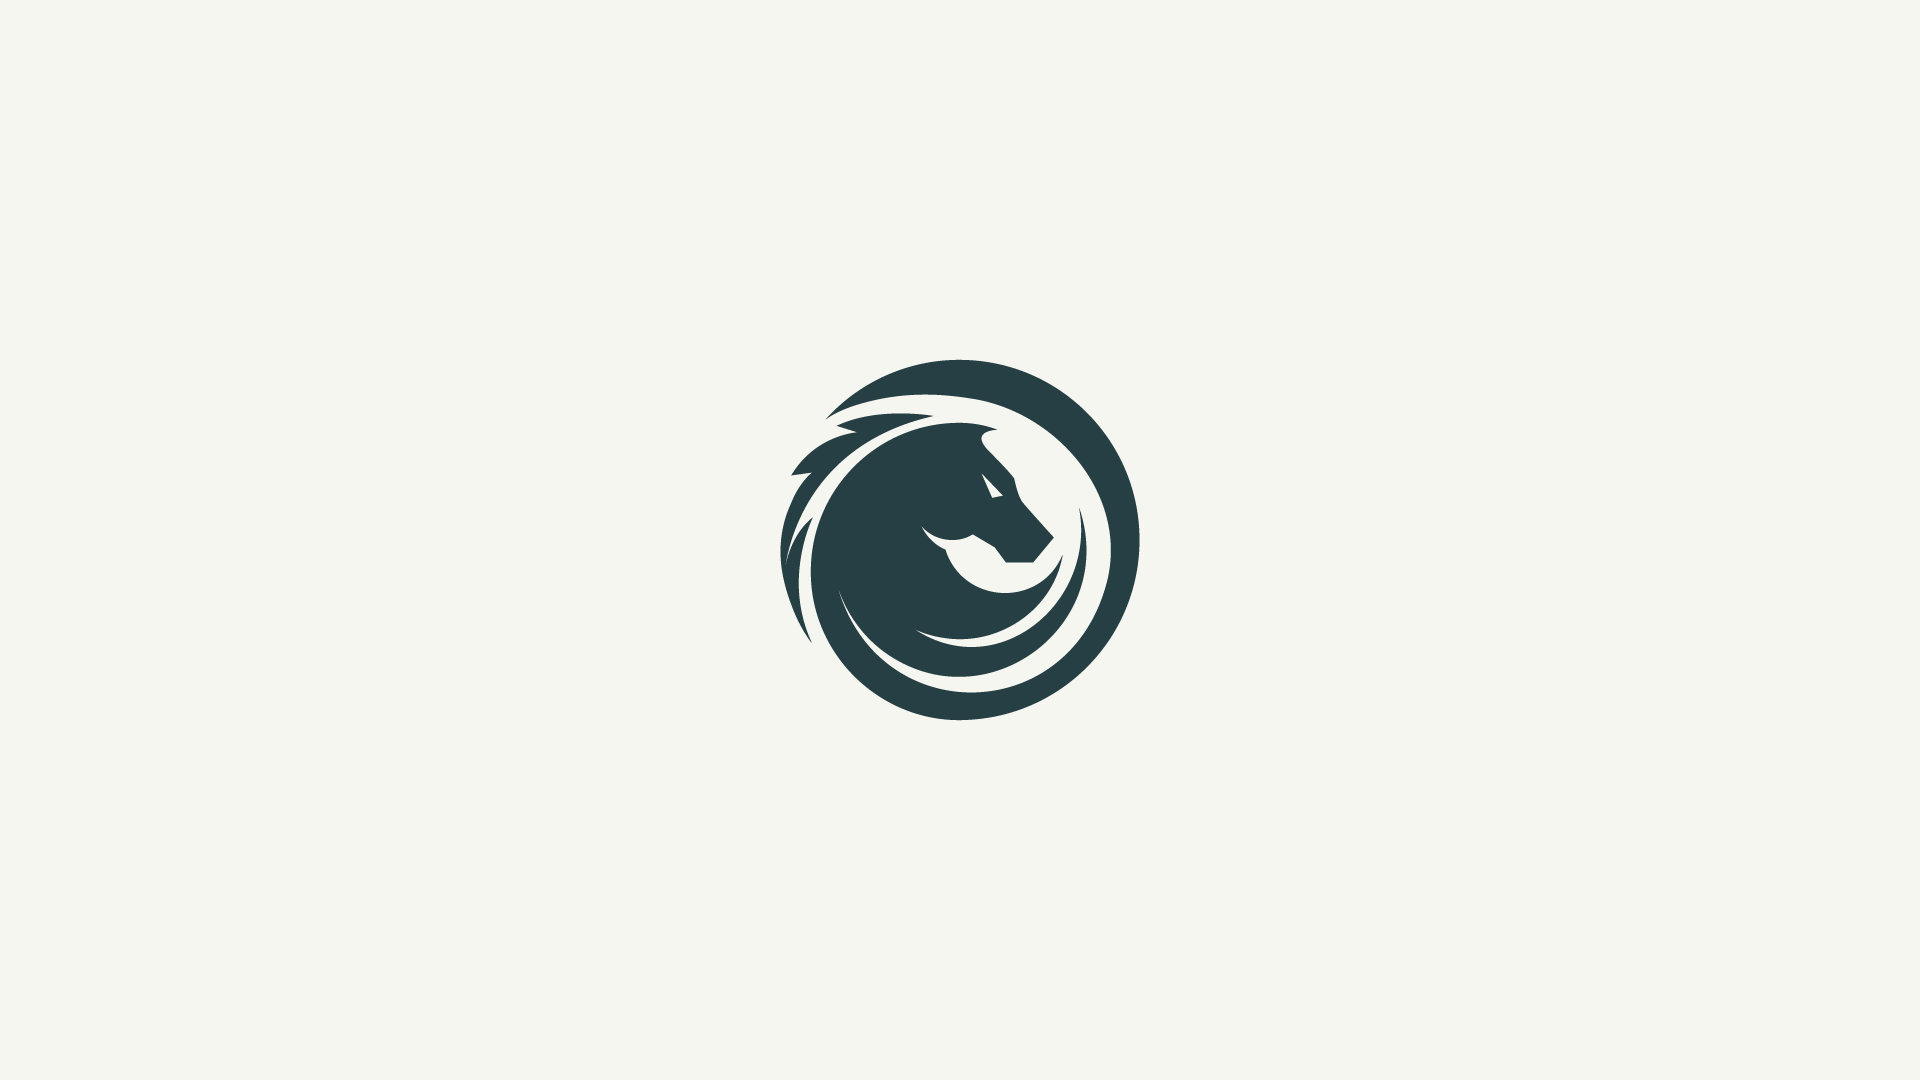 Horse & Shield Logo Design - Simplified